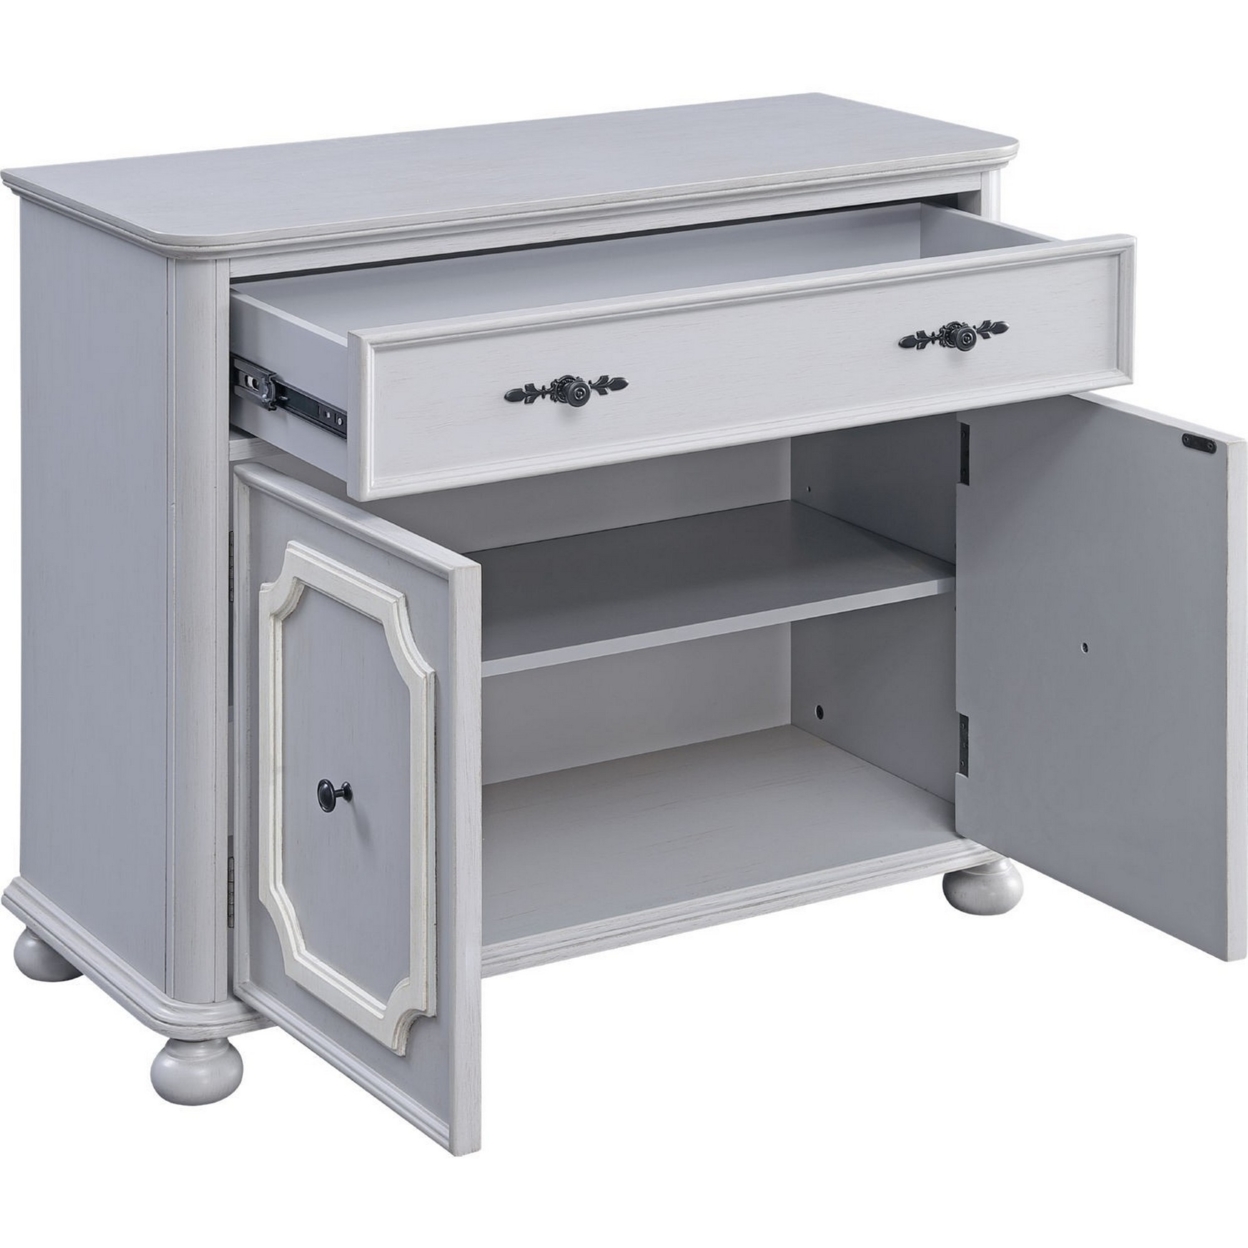 MDF Cabinet With Double Door Storage And Bun Feet, White- Saltoro Sherpi